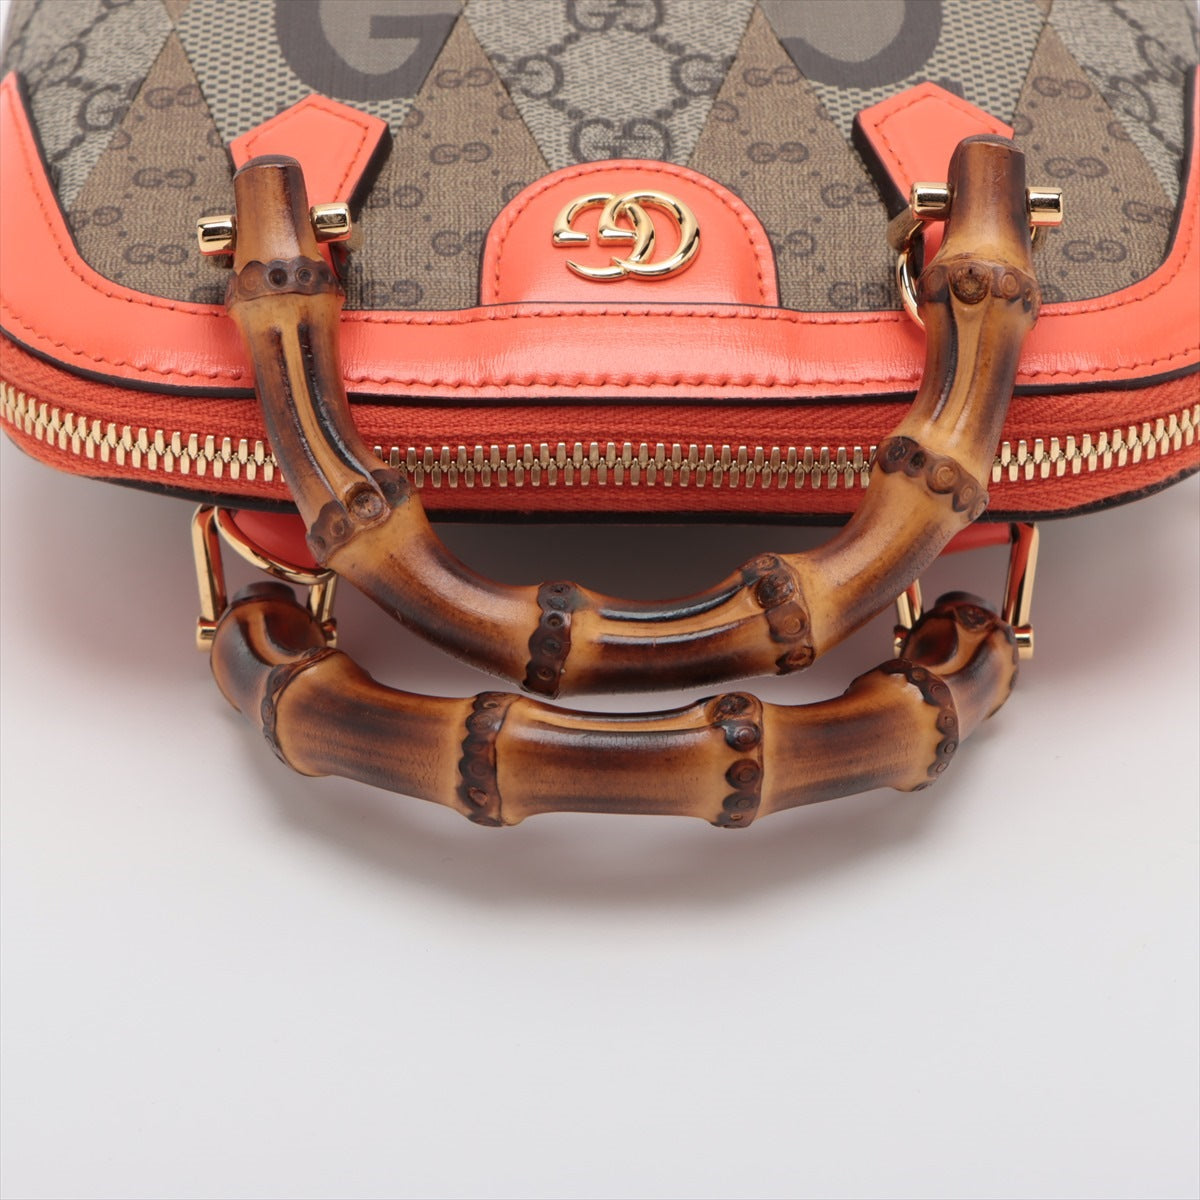 Gucci Diana Bamboo 2 Way Handbag Orange 715775